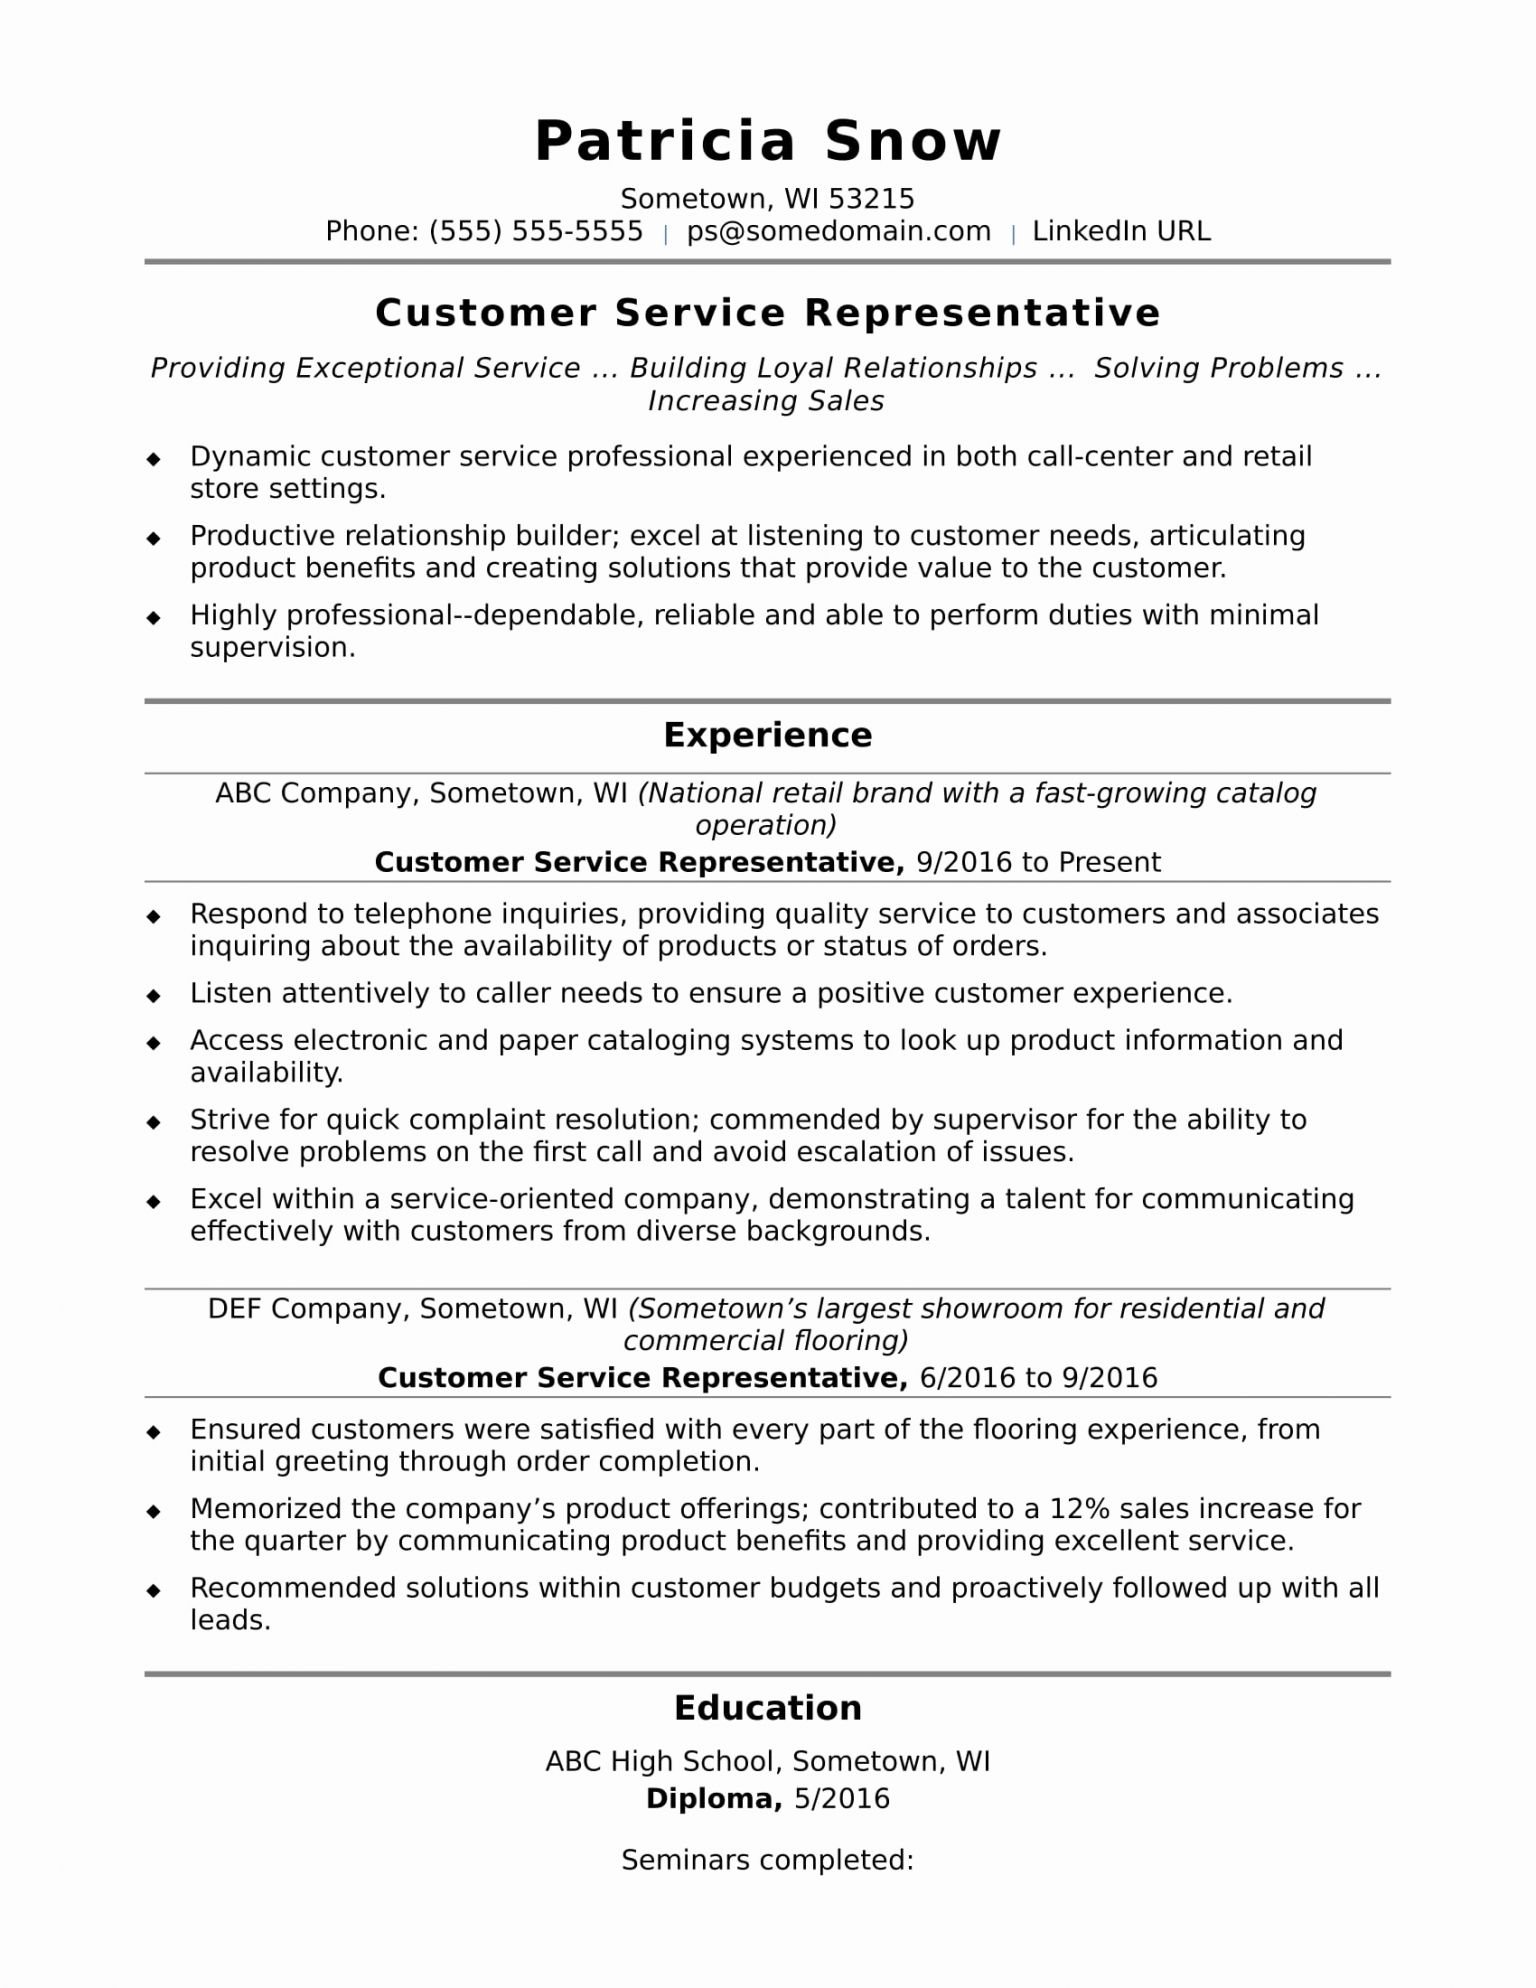 walmart customer service job description for resume